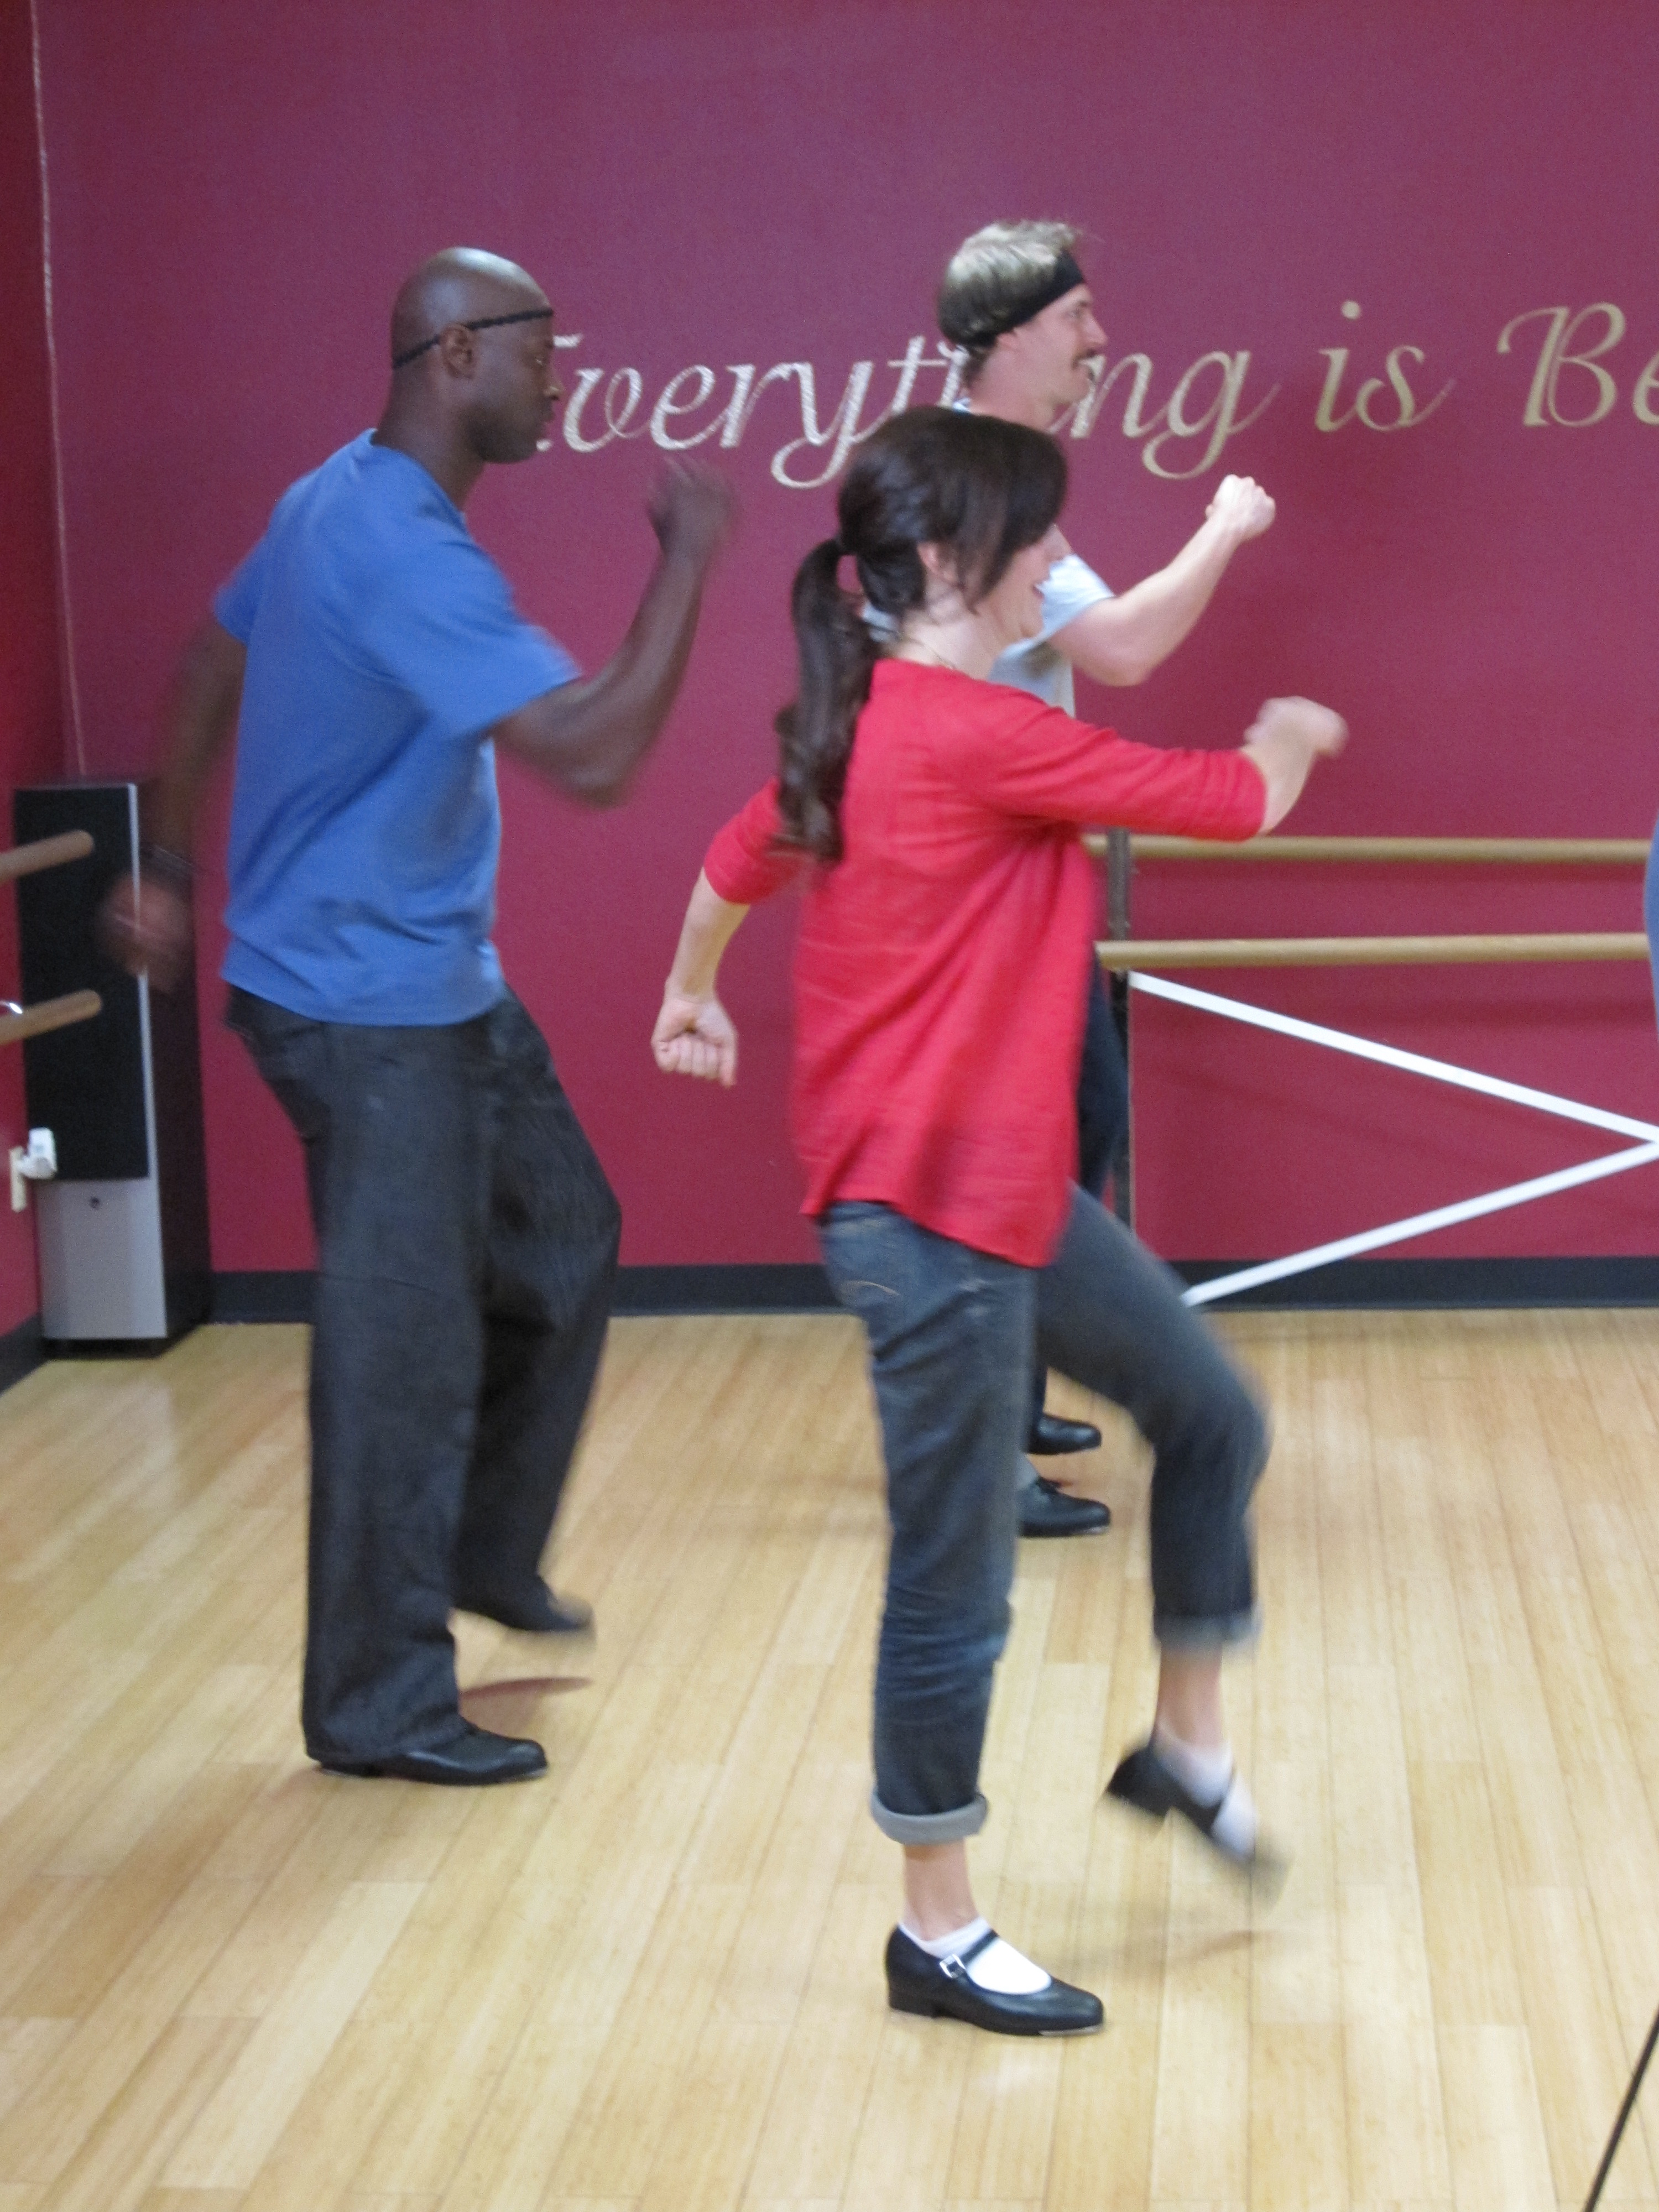 Nadia Dajani tap dancing with baseball players LaTroy Hawkins and John Axford.